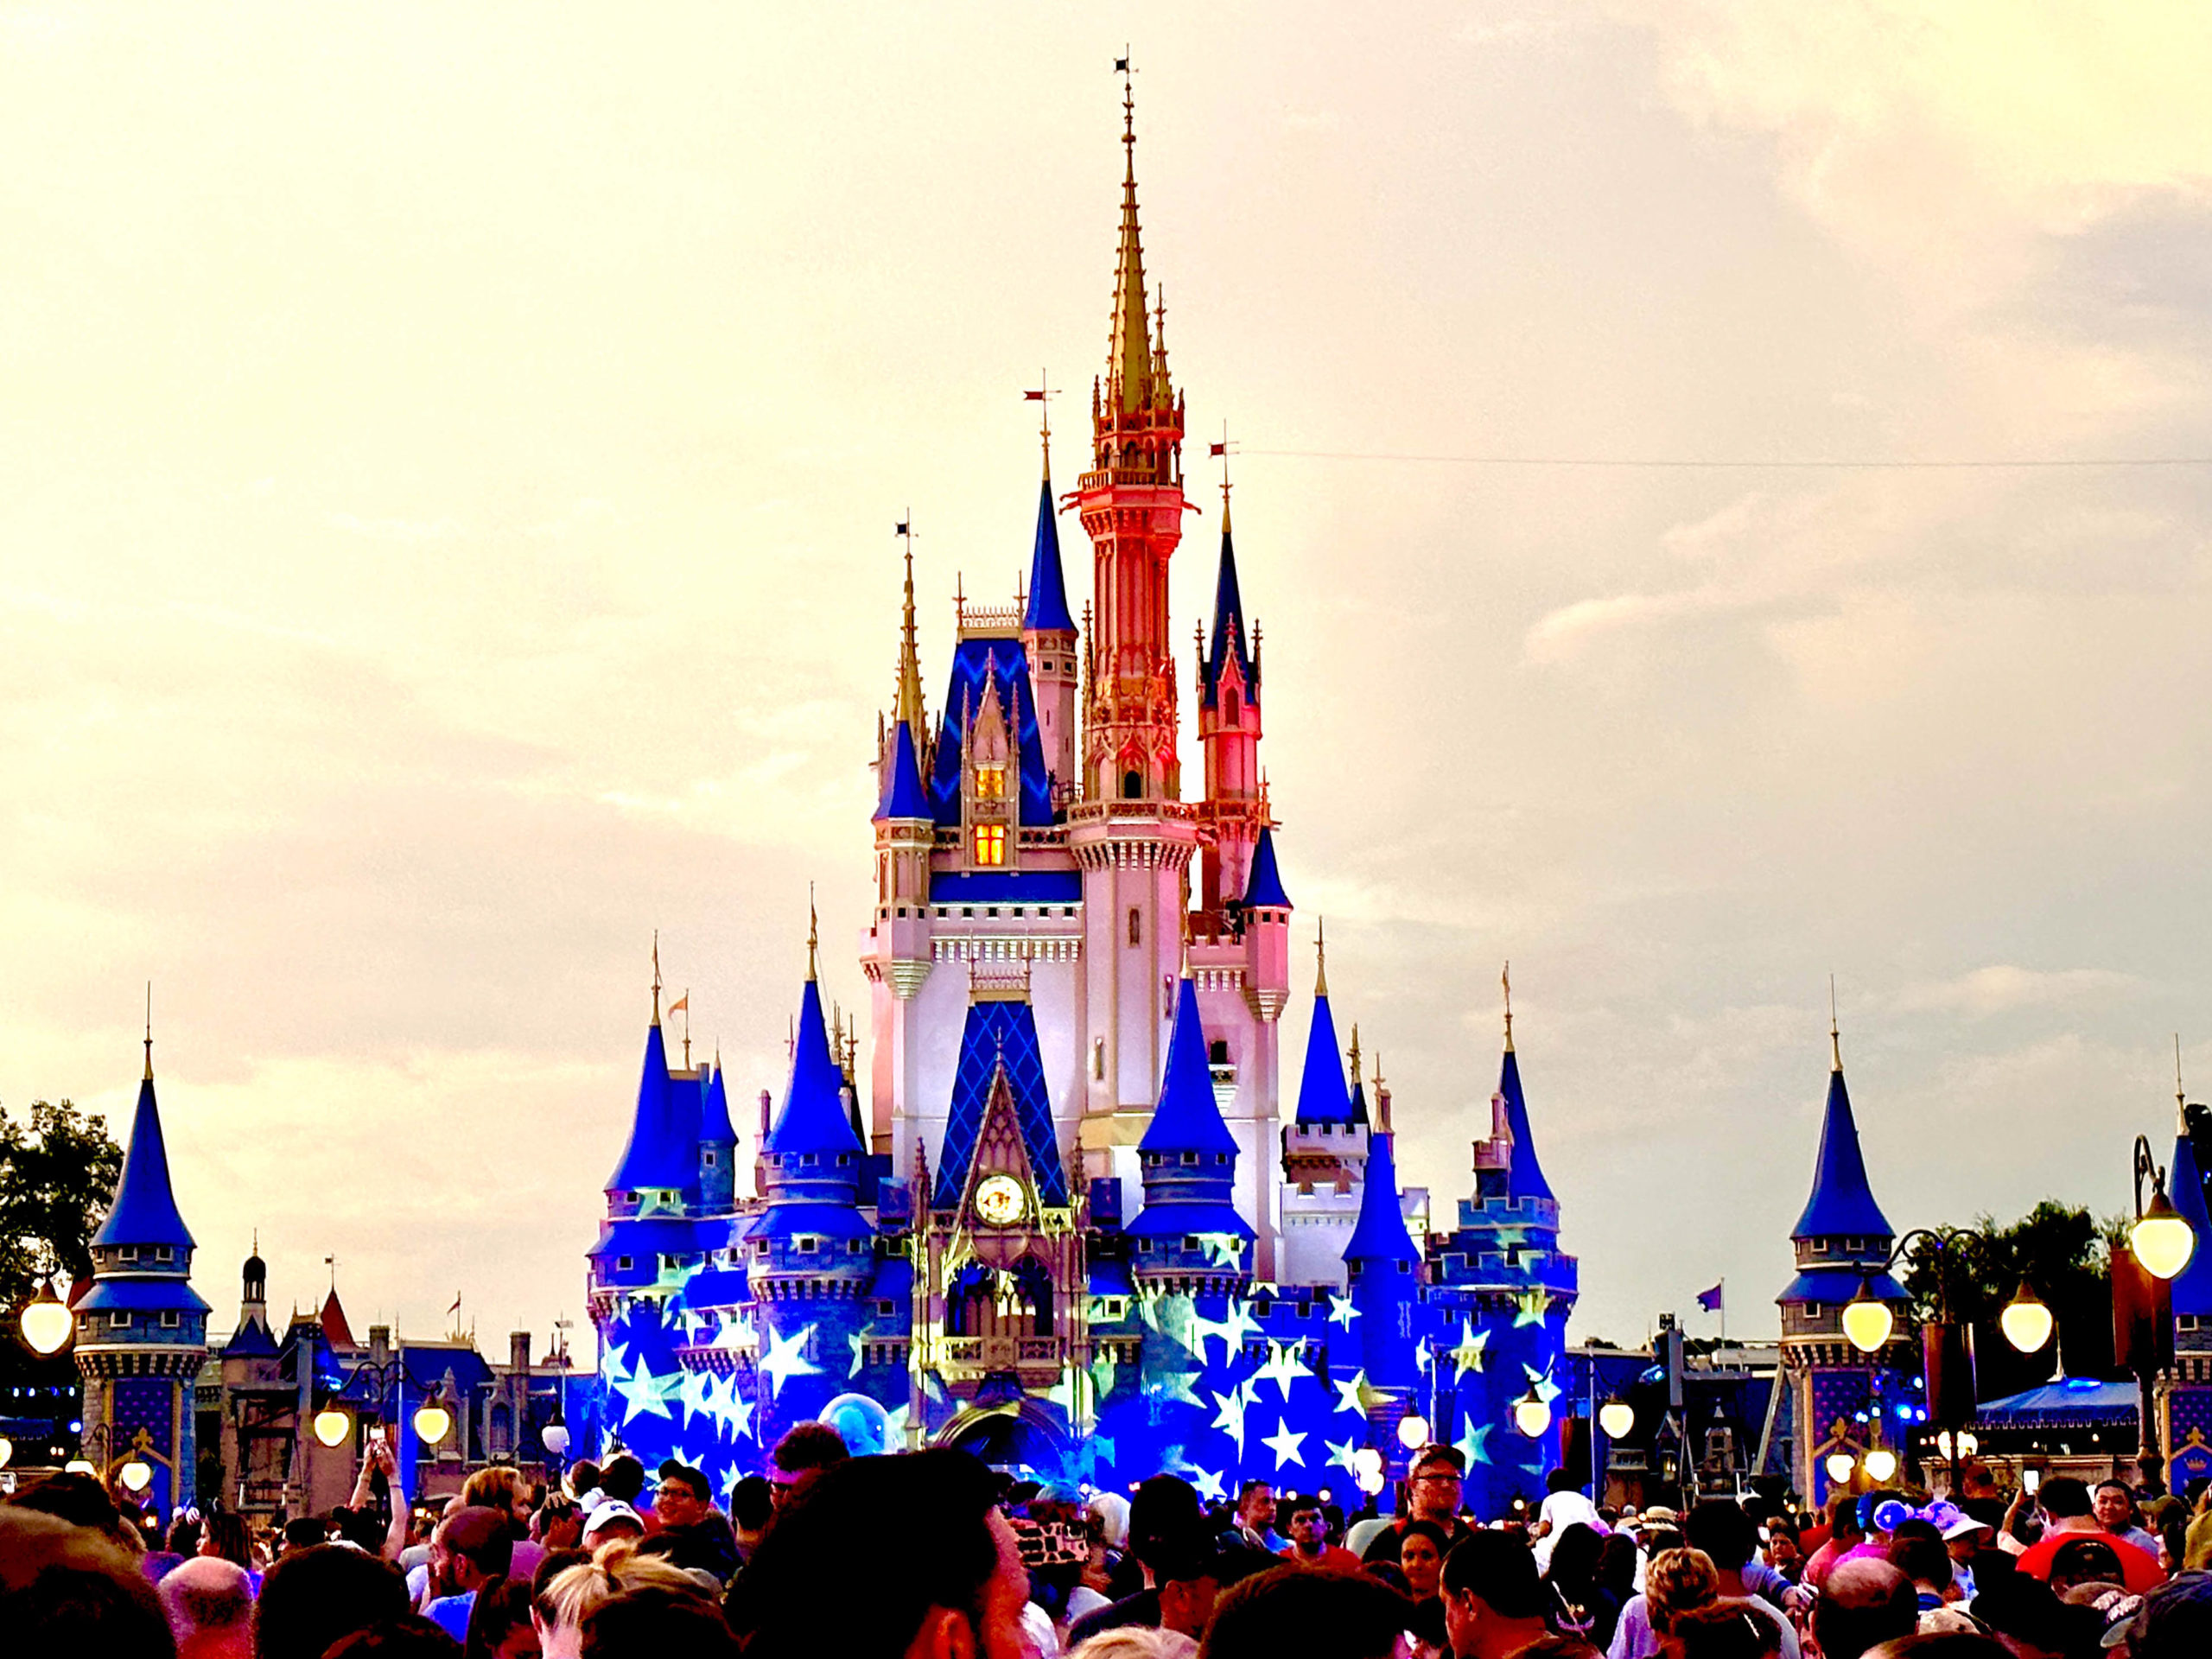 Cinderella Castle on July 3rd